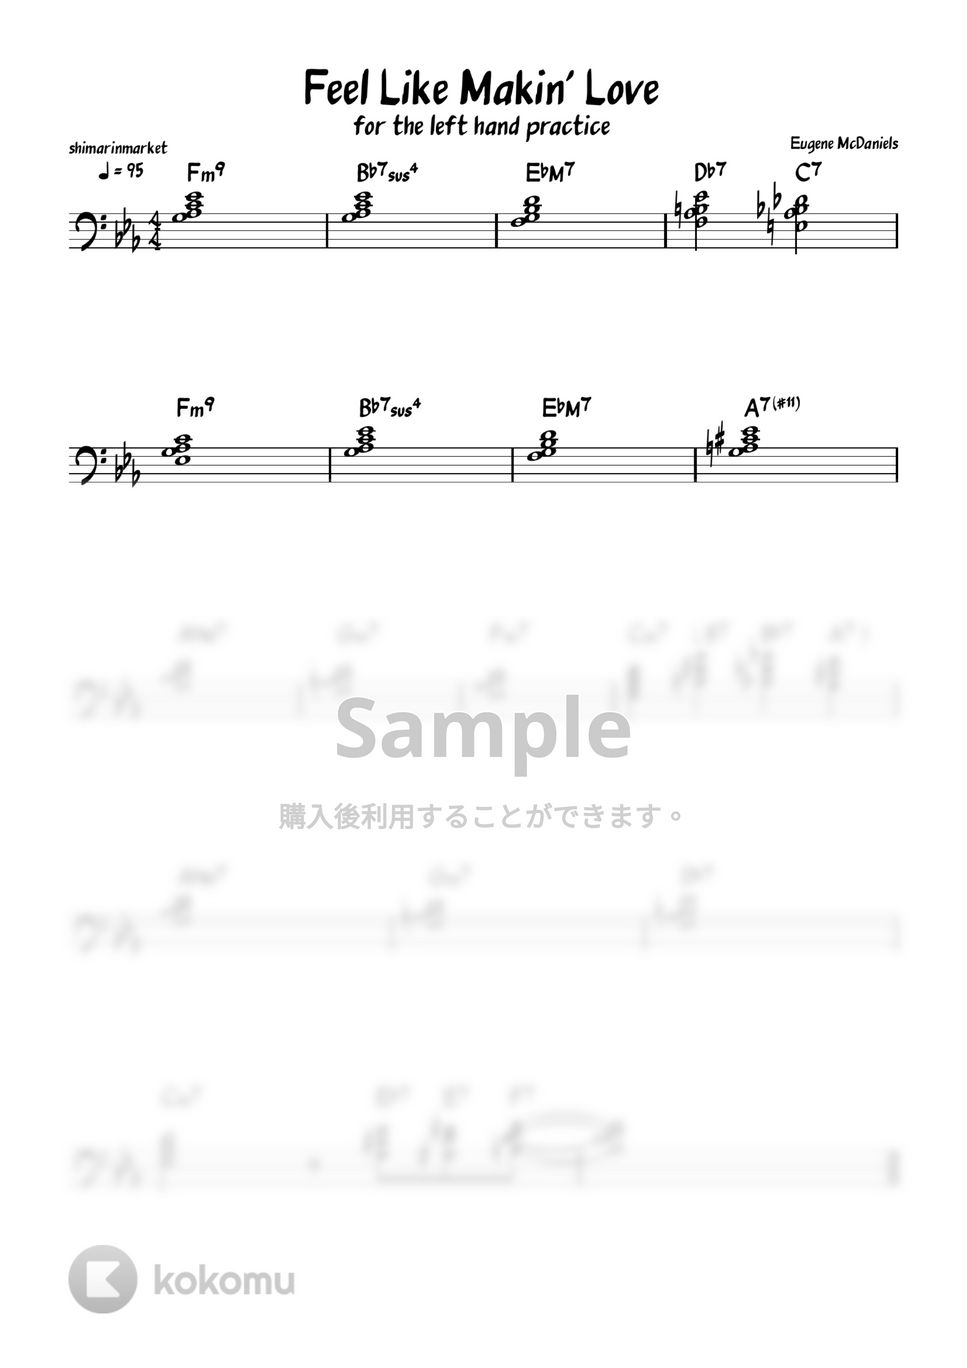 Eugene McDaniels - Feel Like Makin' Love (for the left hand practice) by shimarin market